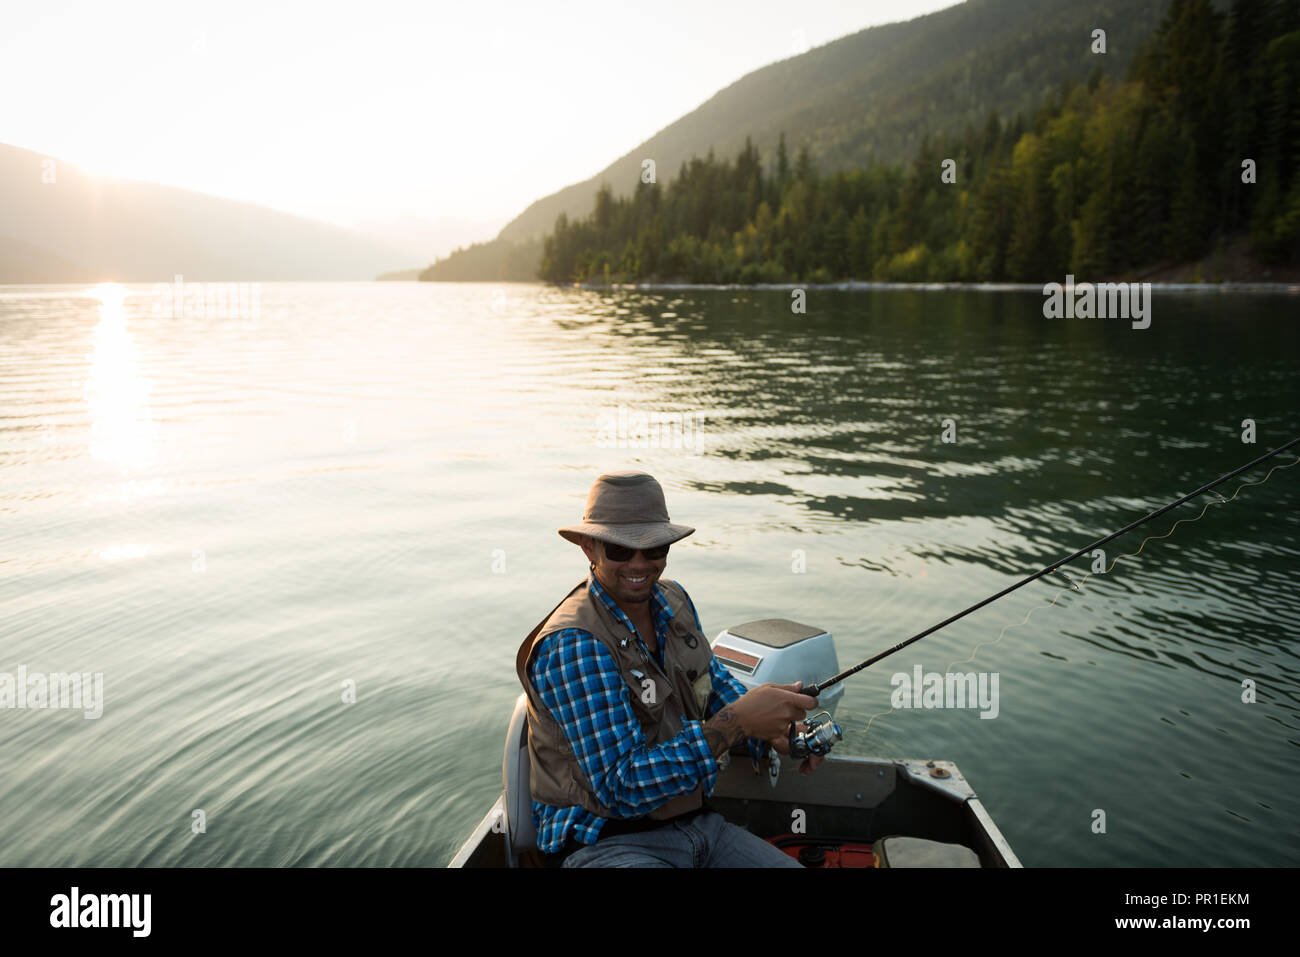 Fisherman fishing in the river Stock Photo